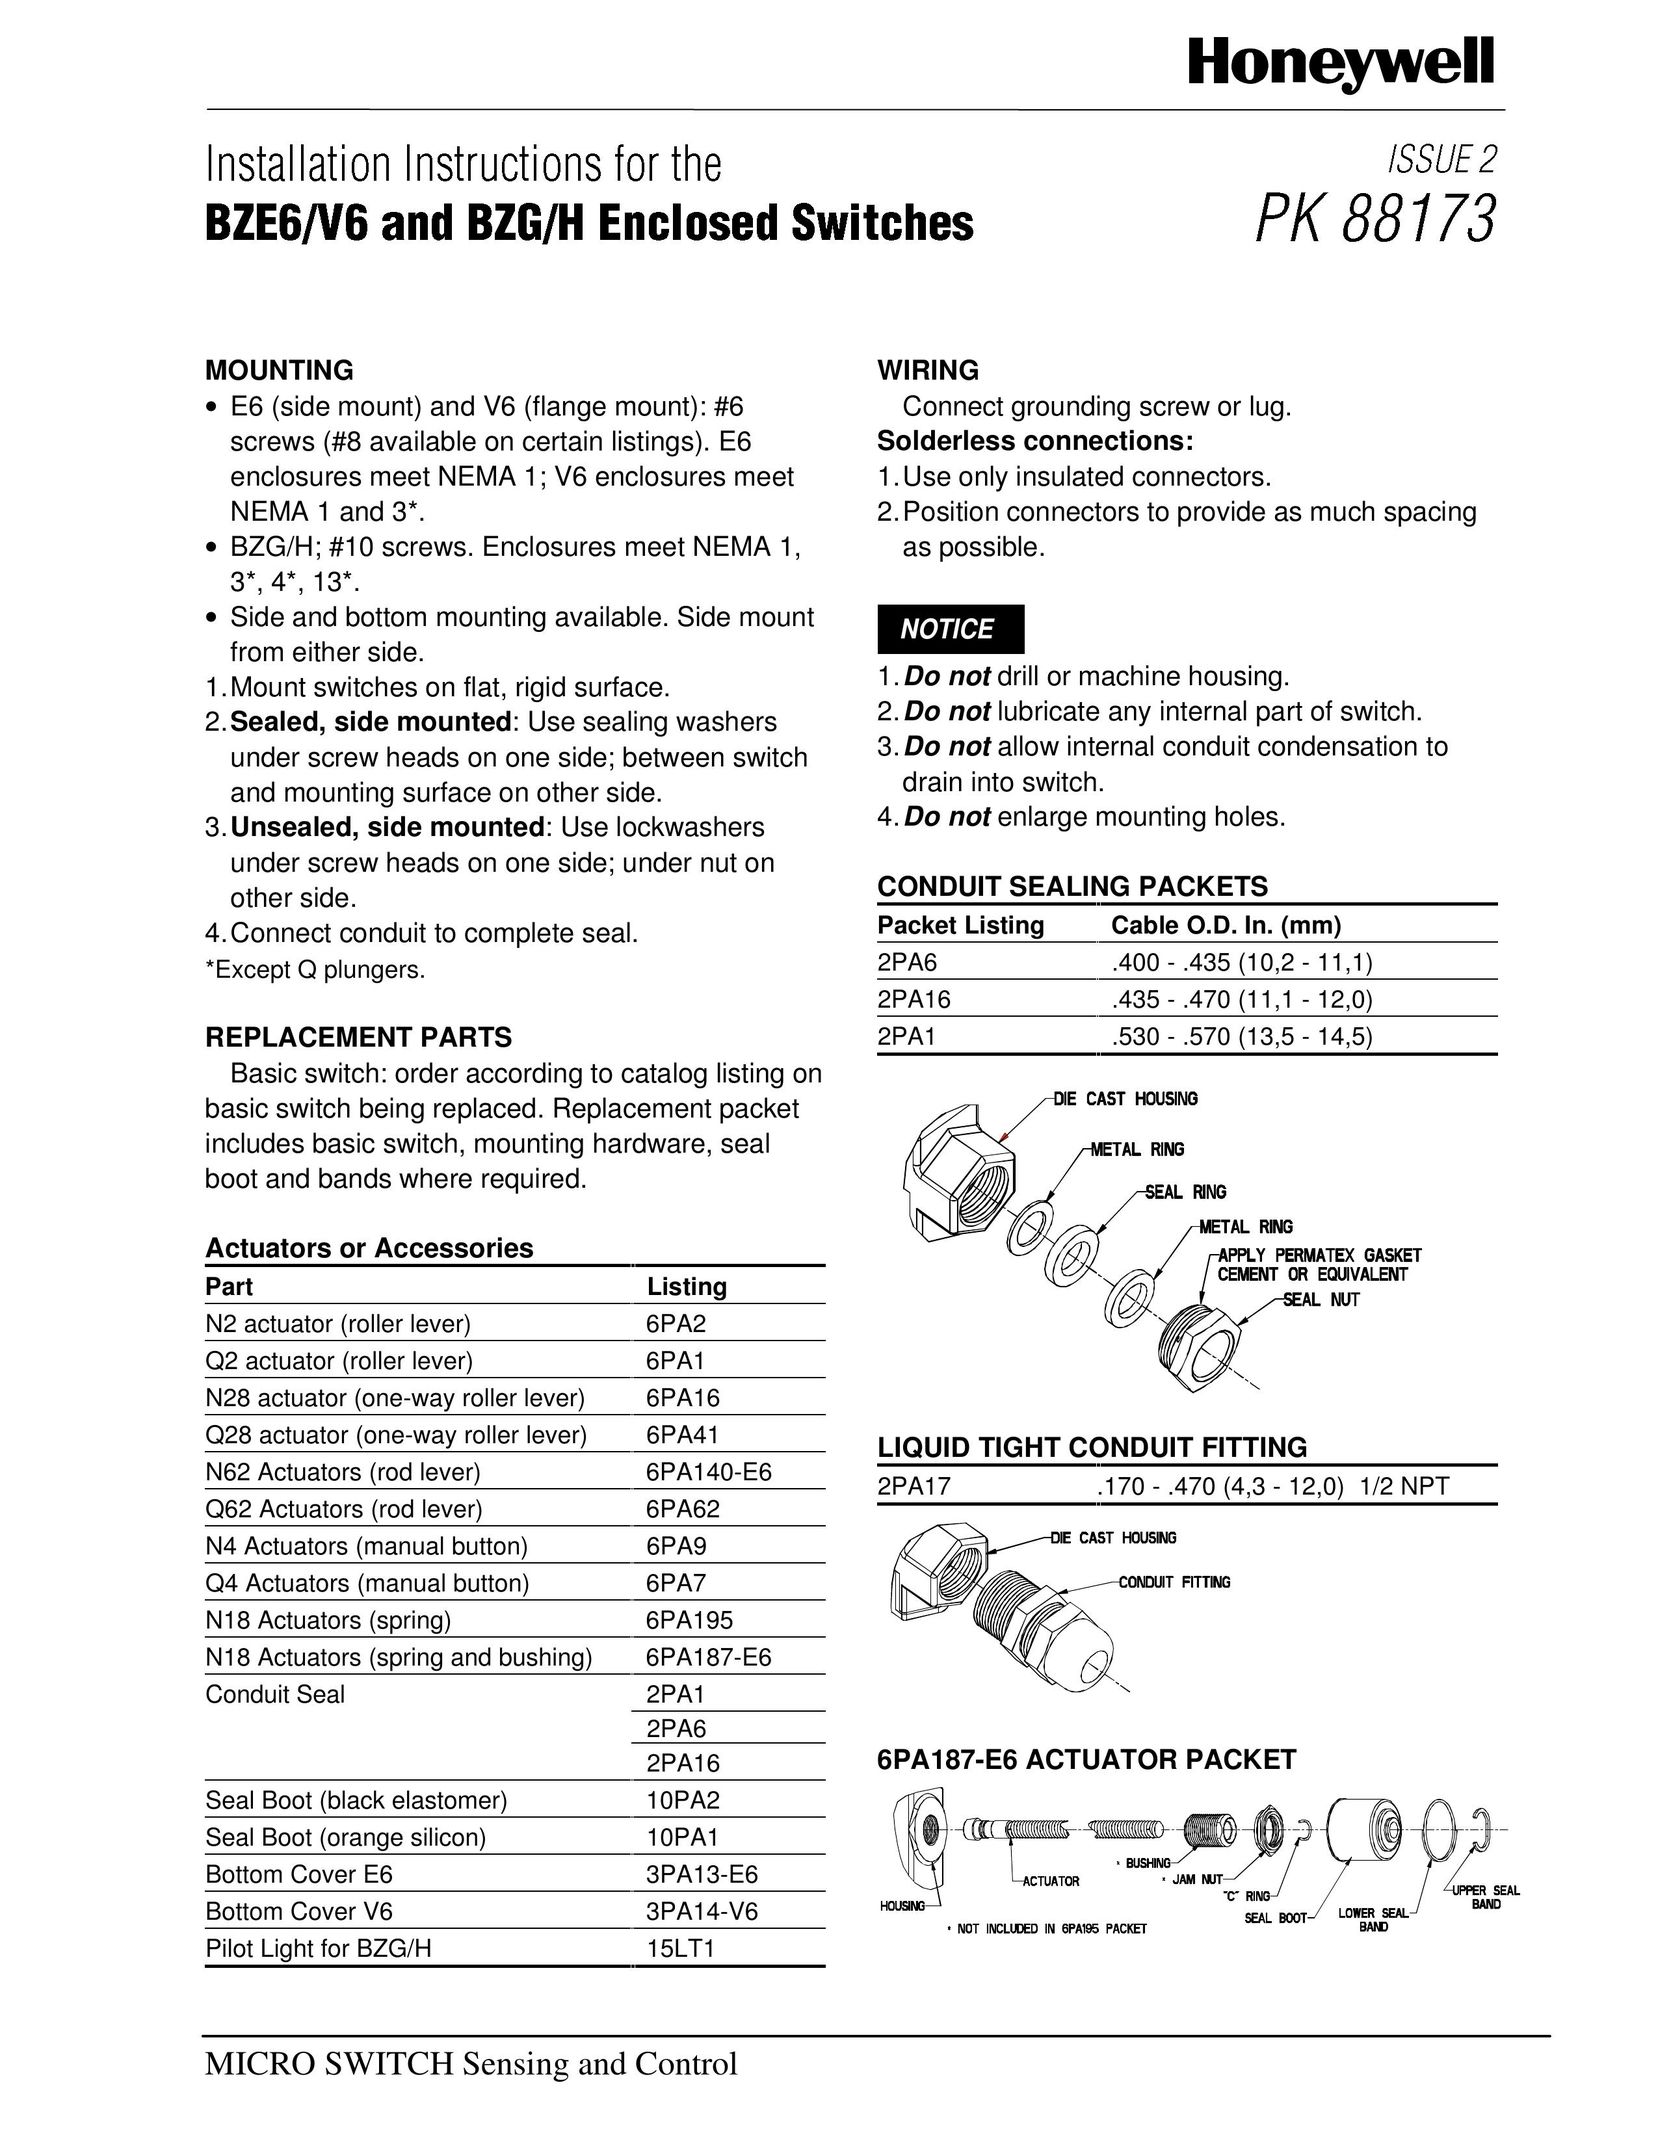 Honeywell BZG/H Switch User Manual